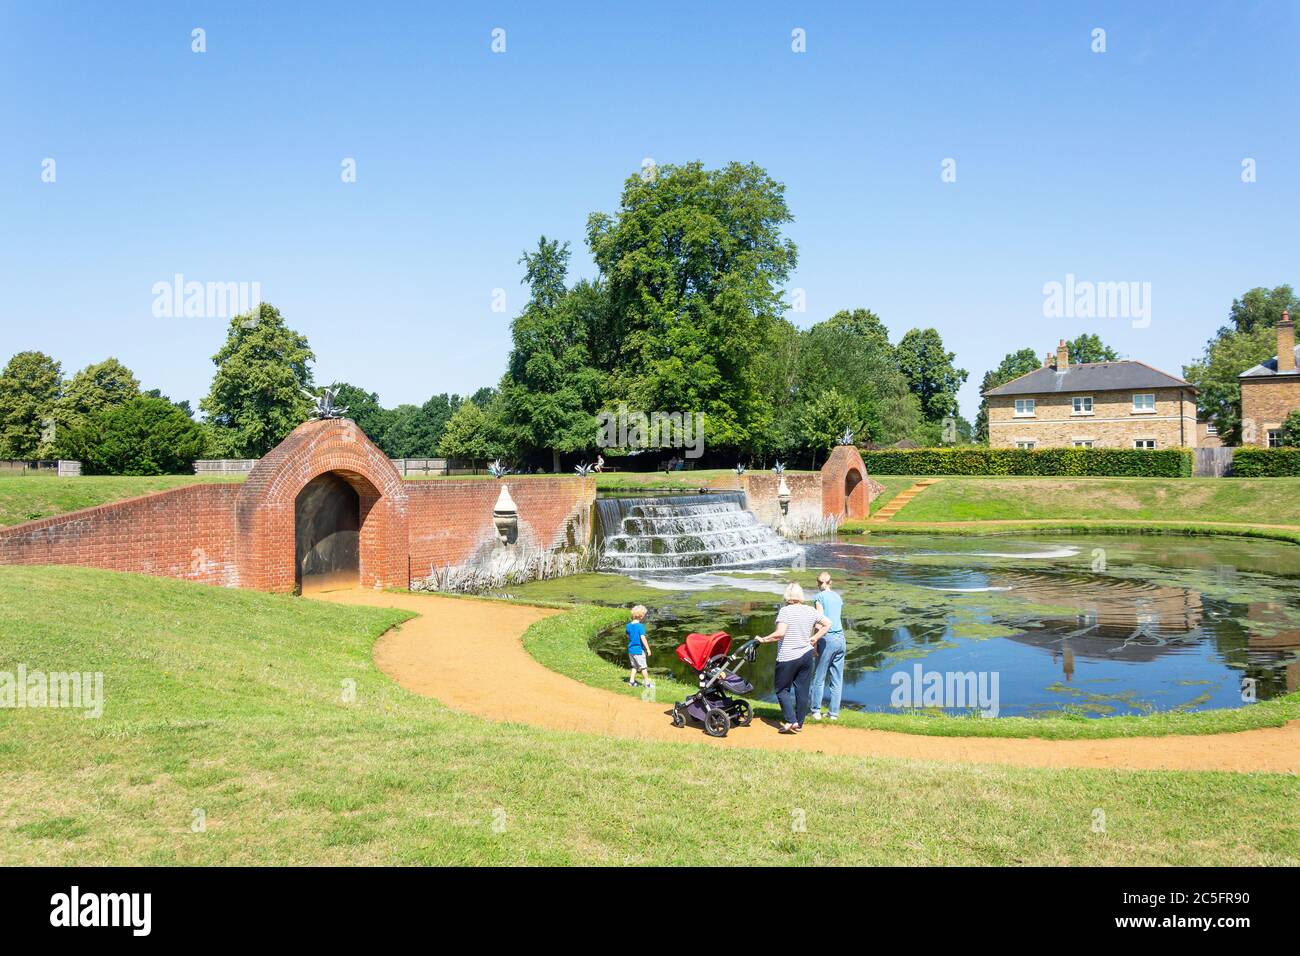 The Water Gardens, Bushy Park, Borough of Richmond upon Thames, Greater London, England, United Kingdom Stock Photo